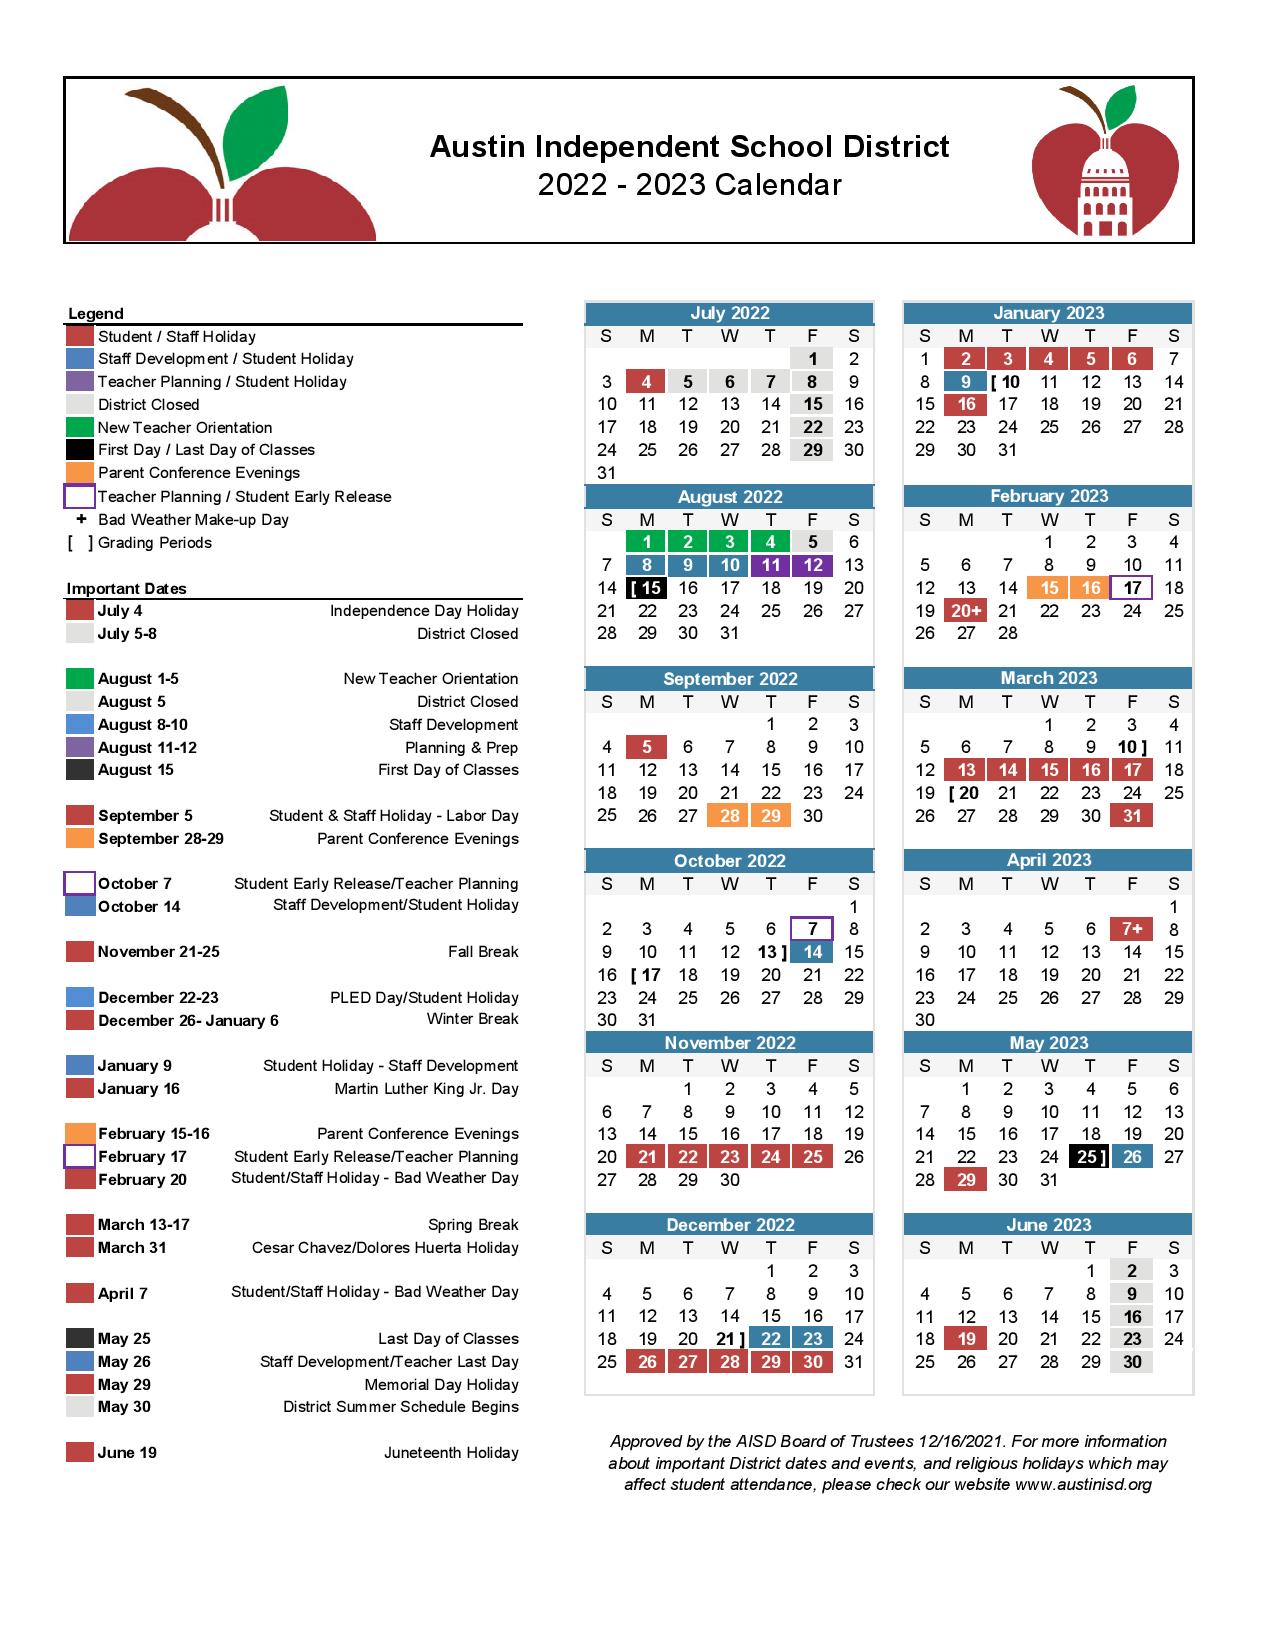 Austin Independent School District Calendar Holidays 20222023